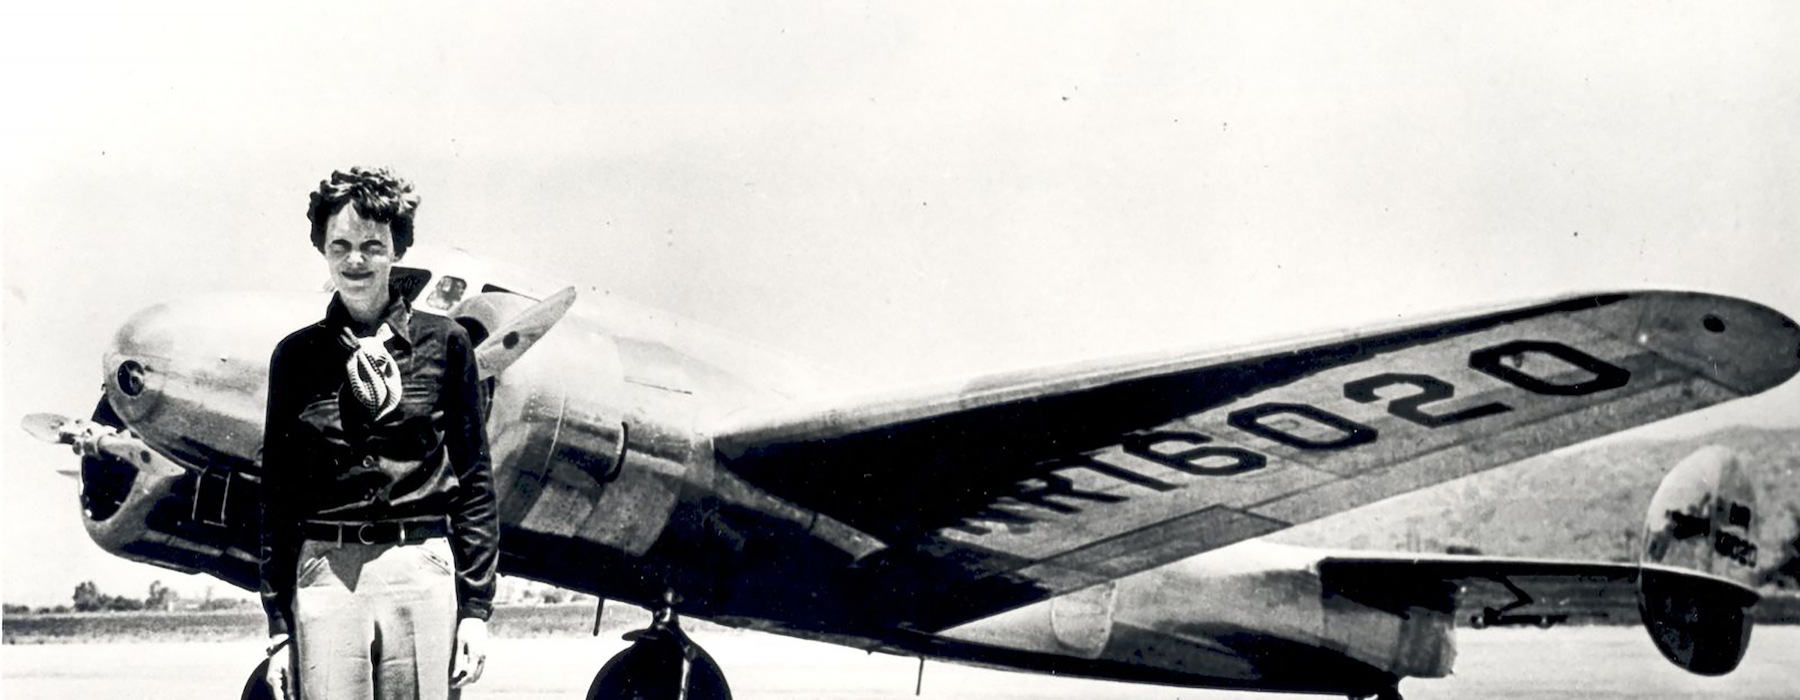 retro photo of a pilot standing beside an plane on a runway